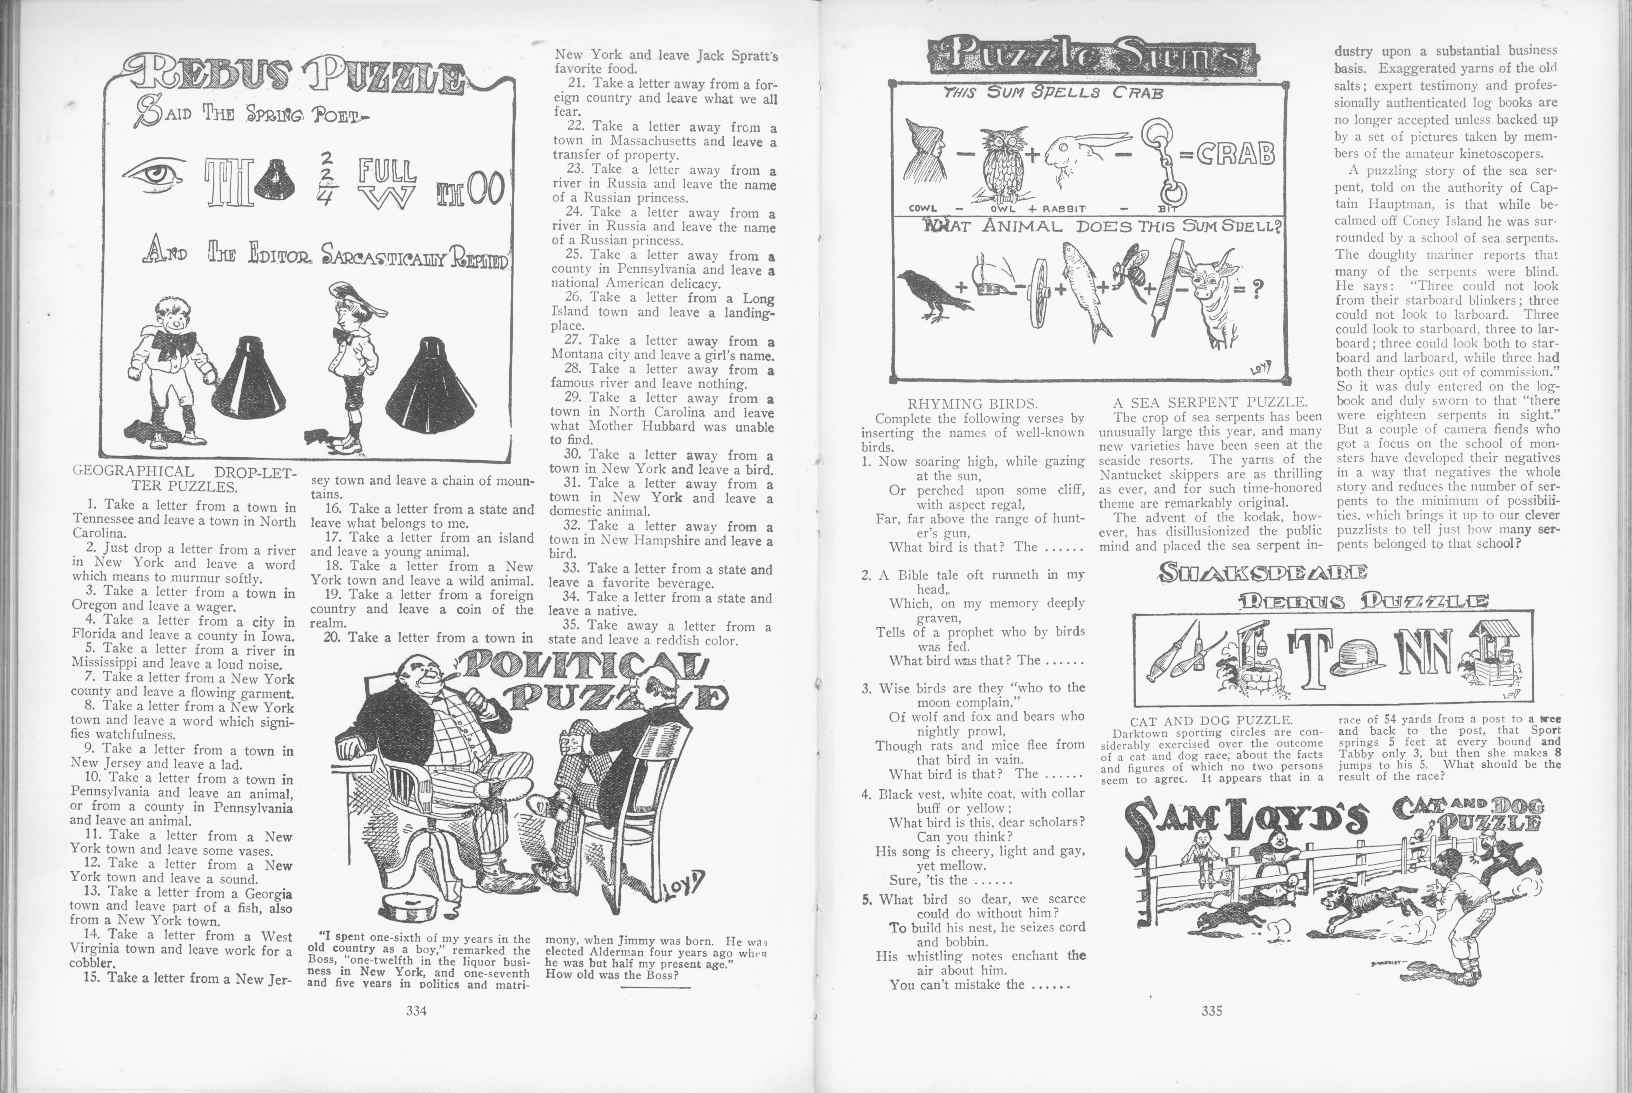 Sam Loyd - Cyclopedia of Puzzles - page 334-335